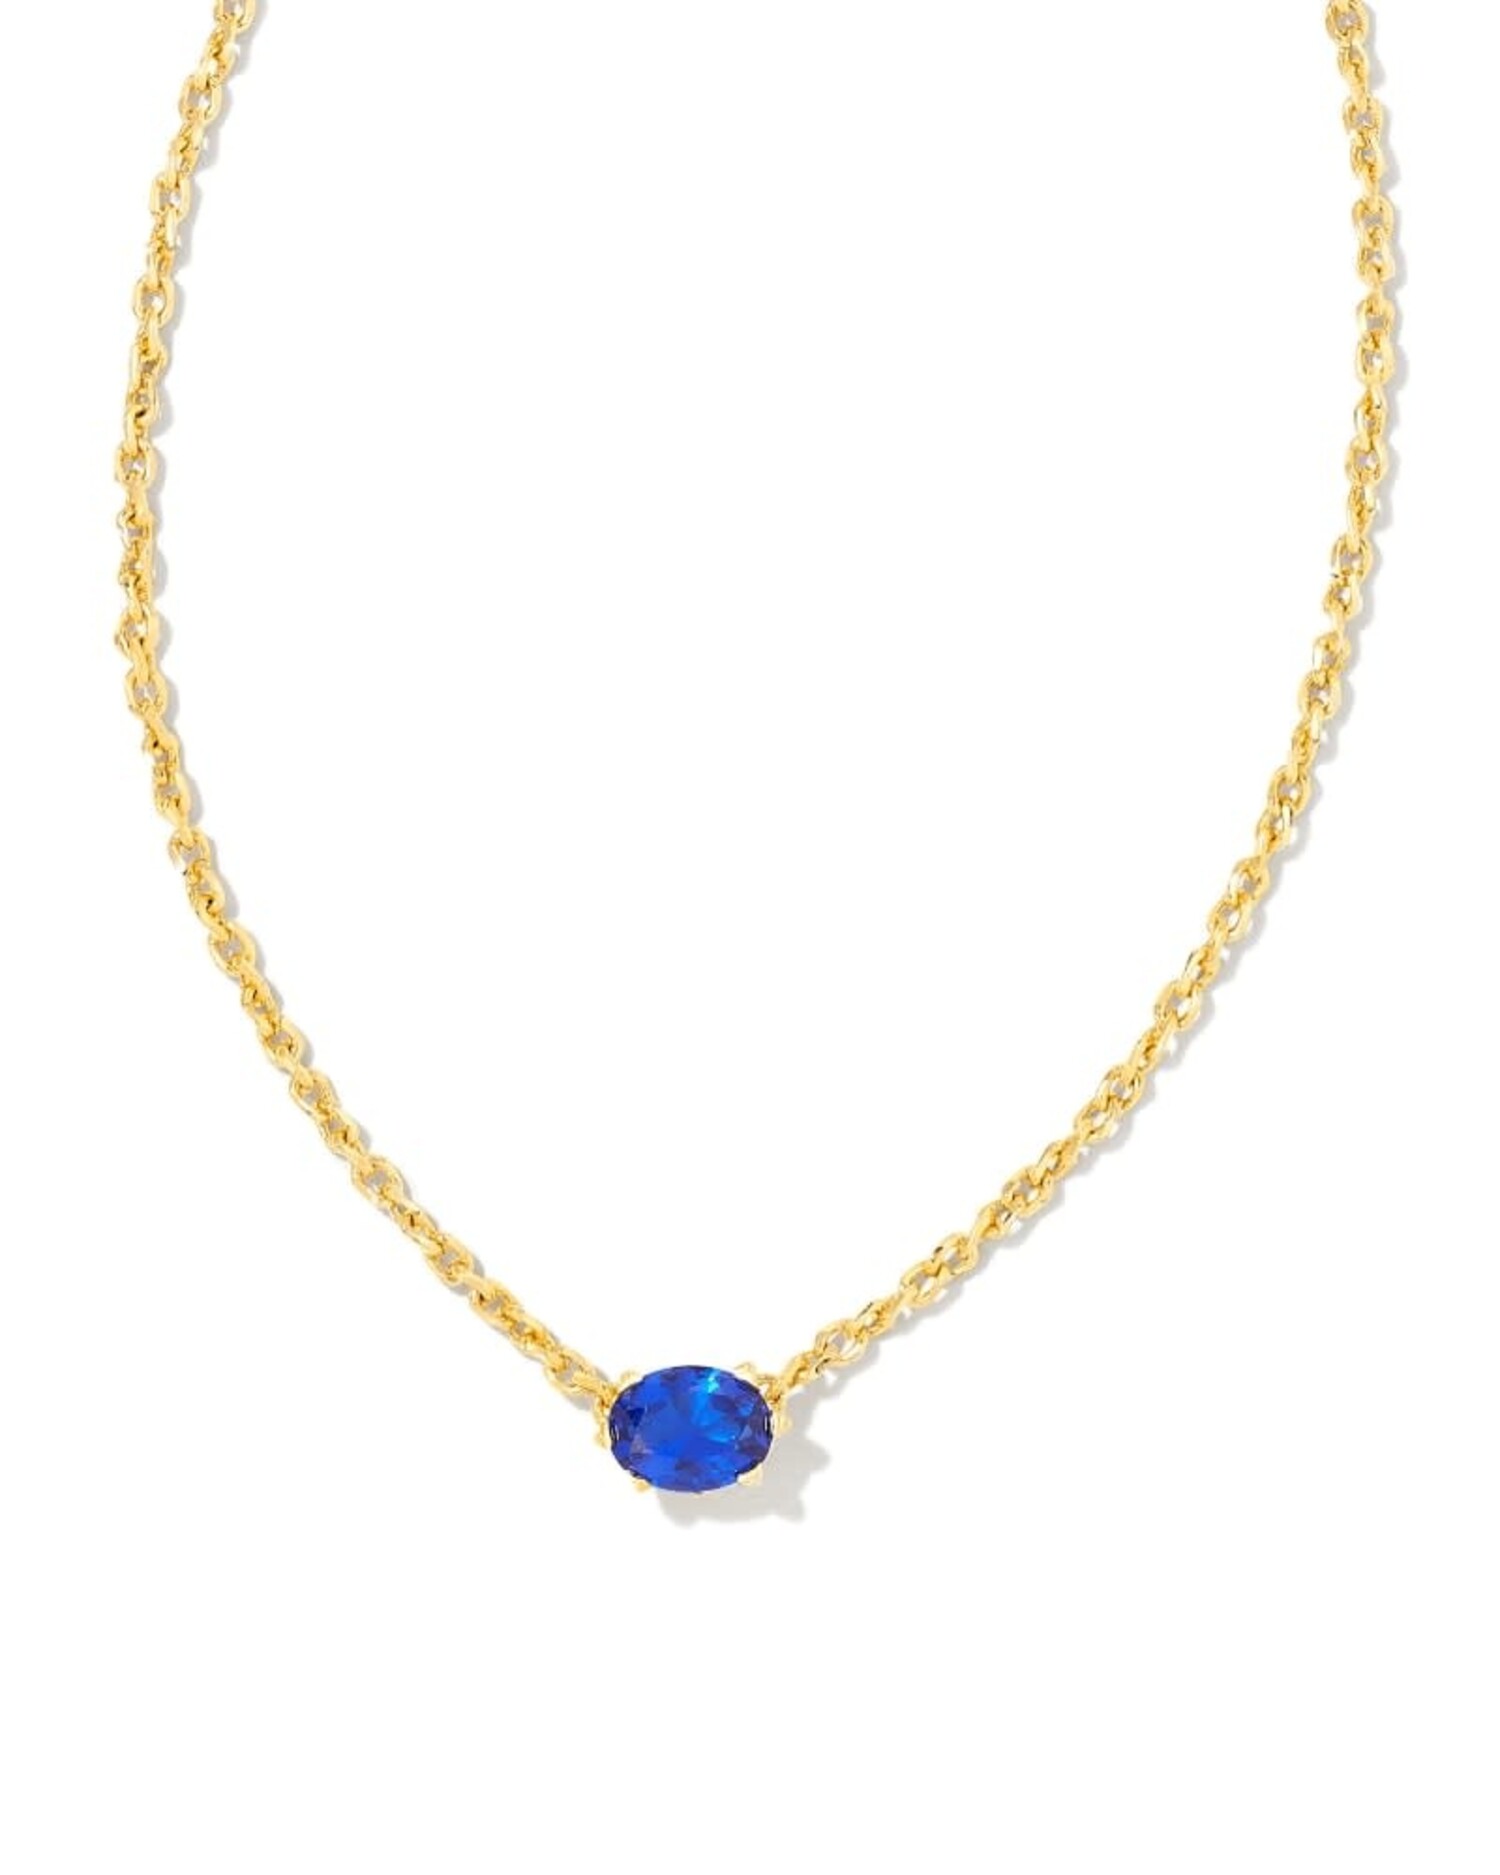 Kendra Scott | Jewelry | Kendra Scott New Elisa Green Necklace With  Original Packaging And Gift Receipt | Poshmark